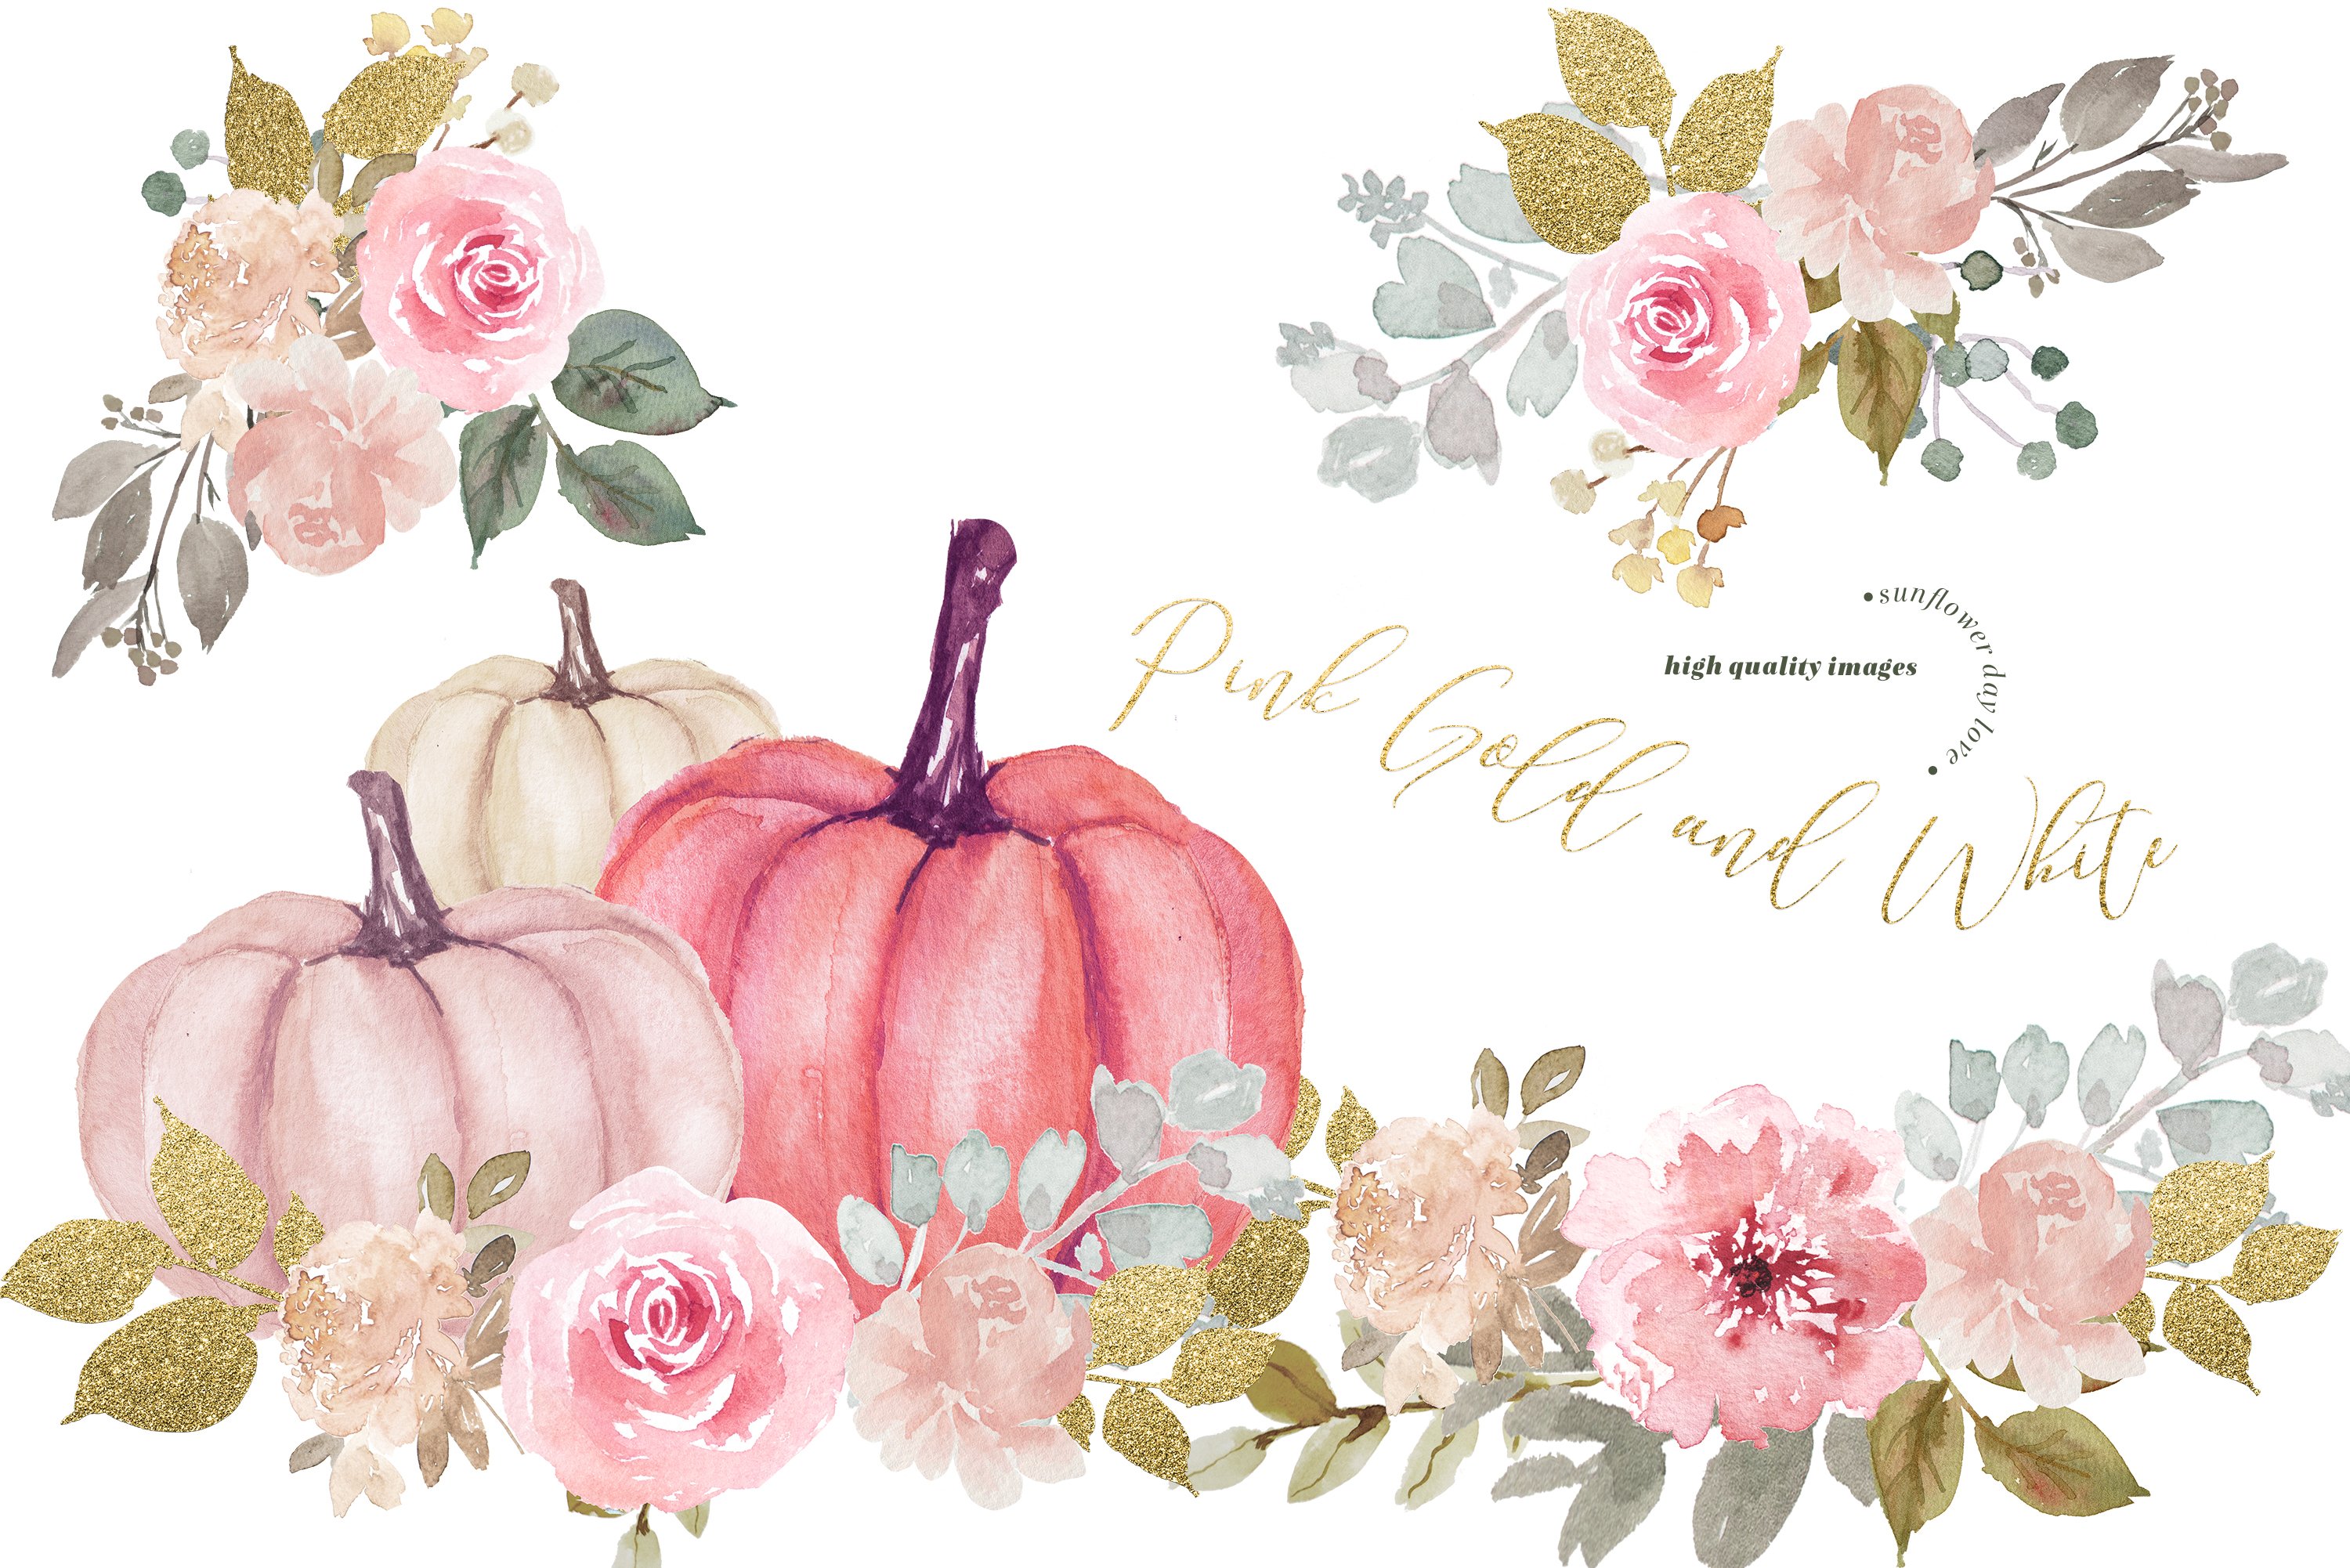 Pink flowers and pumpkins illustration.